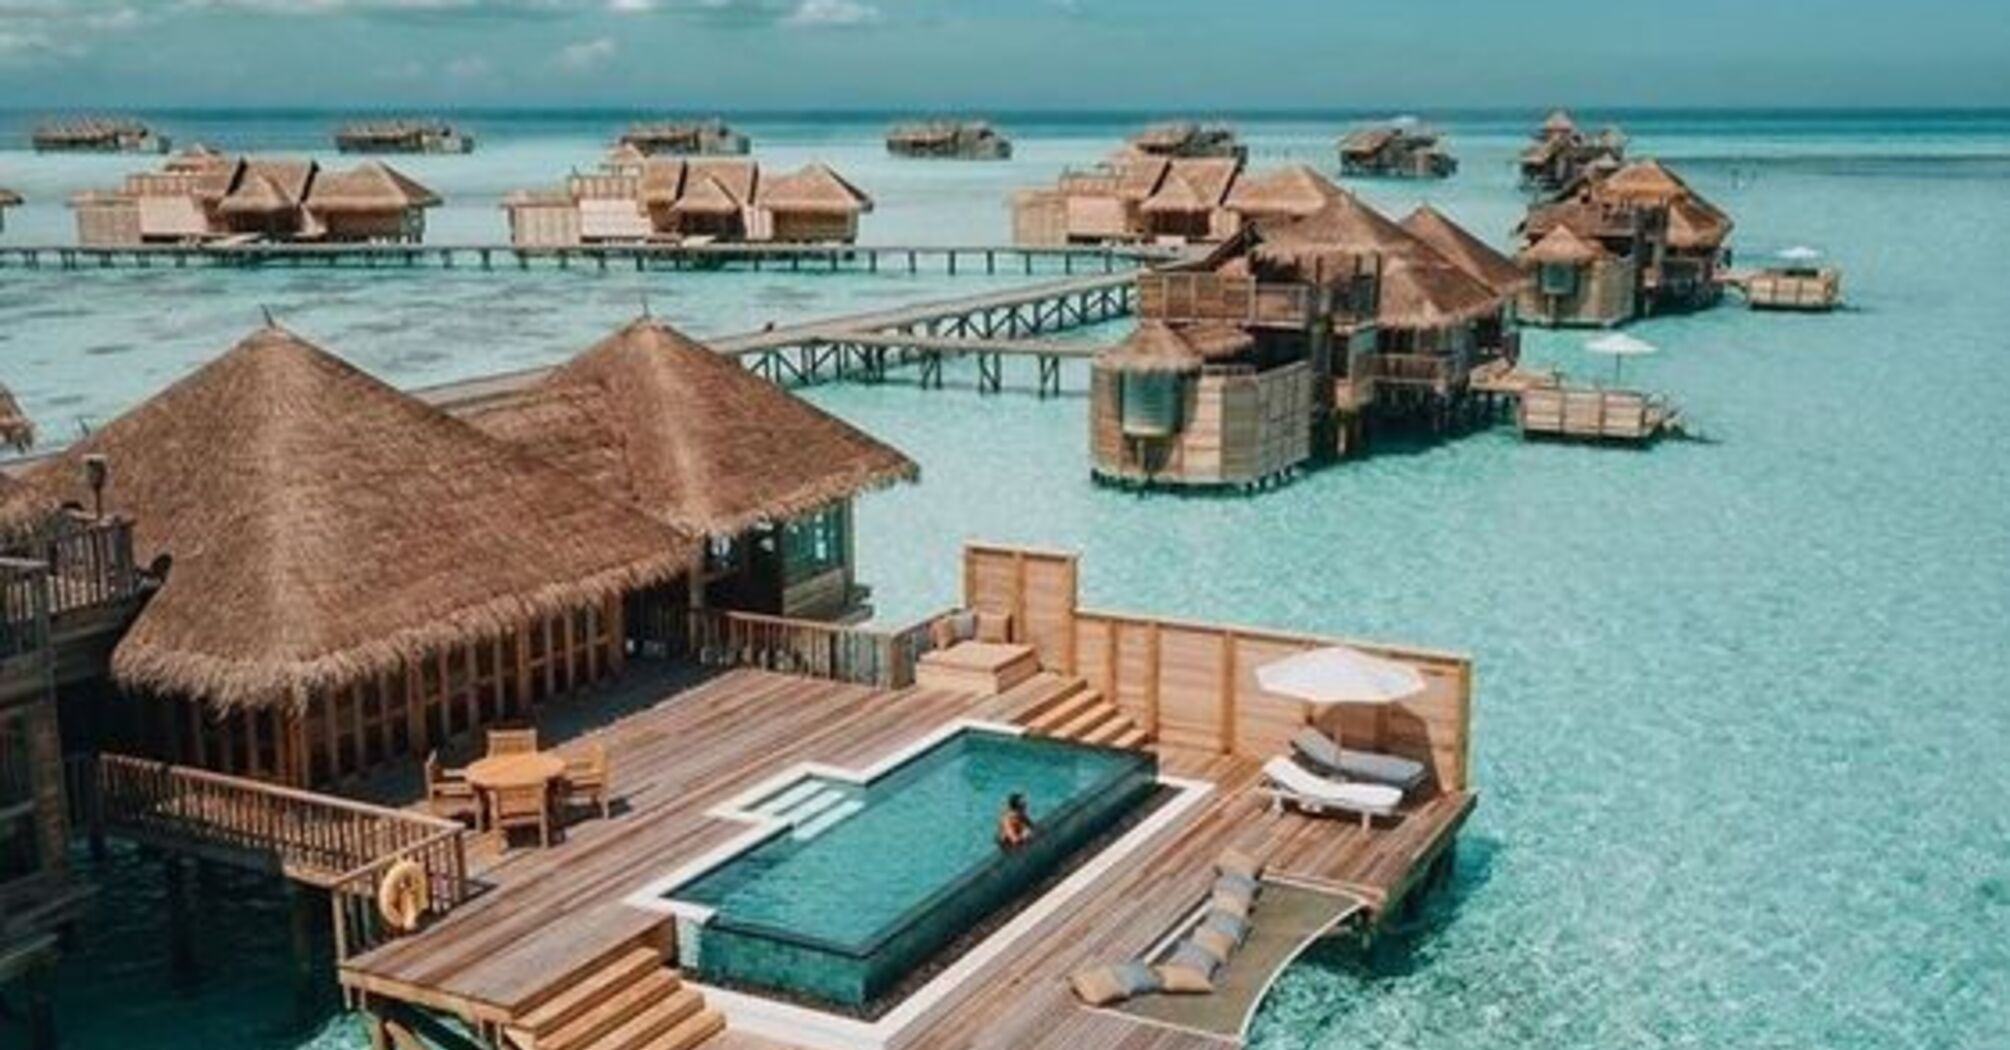 Vacation in the Maldives: Expectations vs. Reality